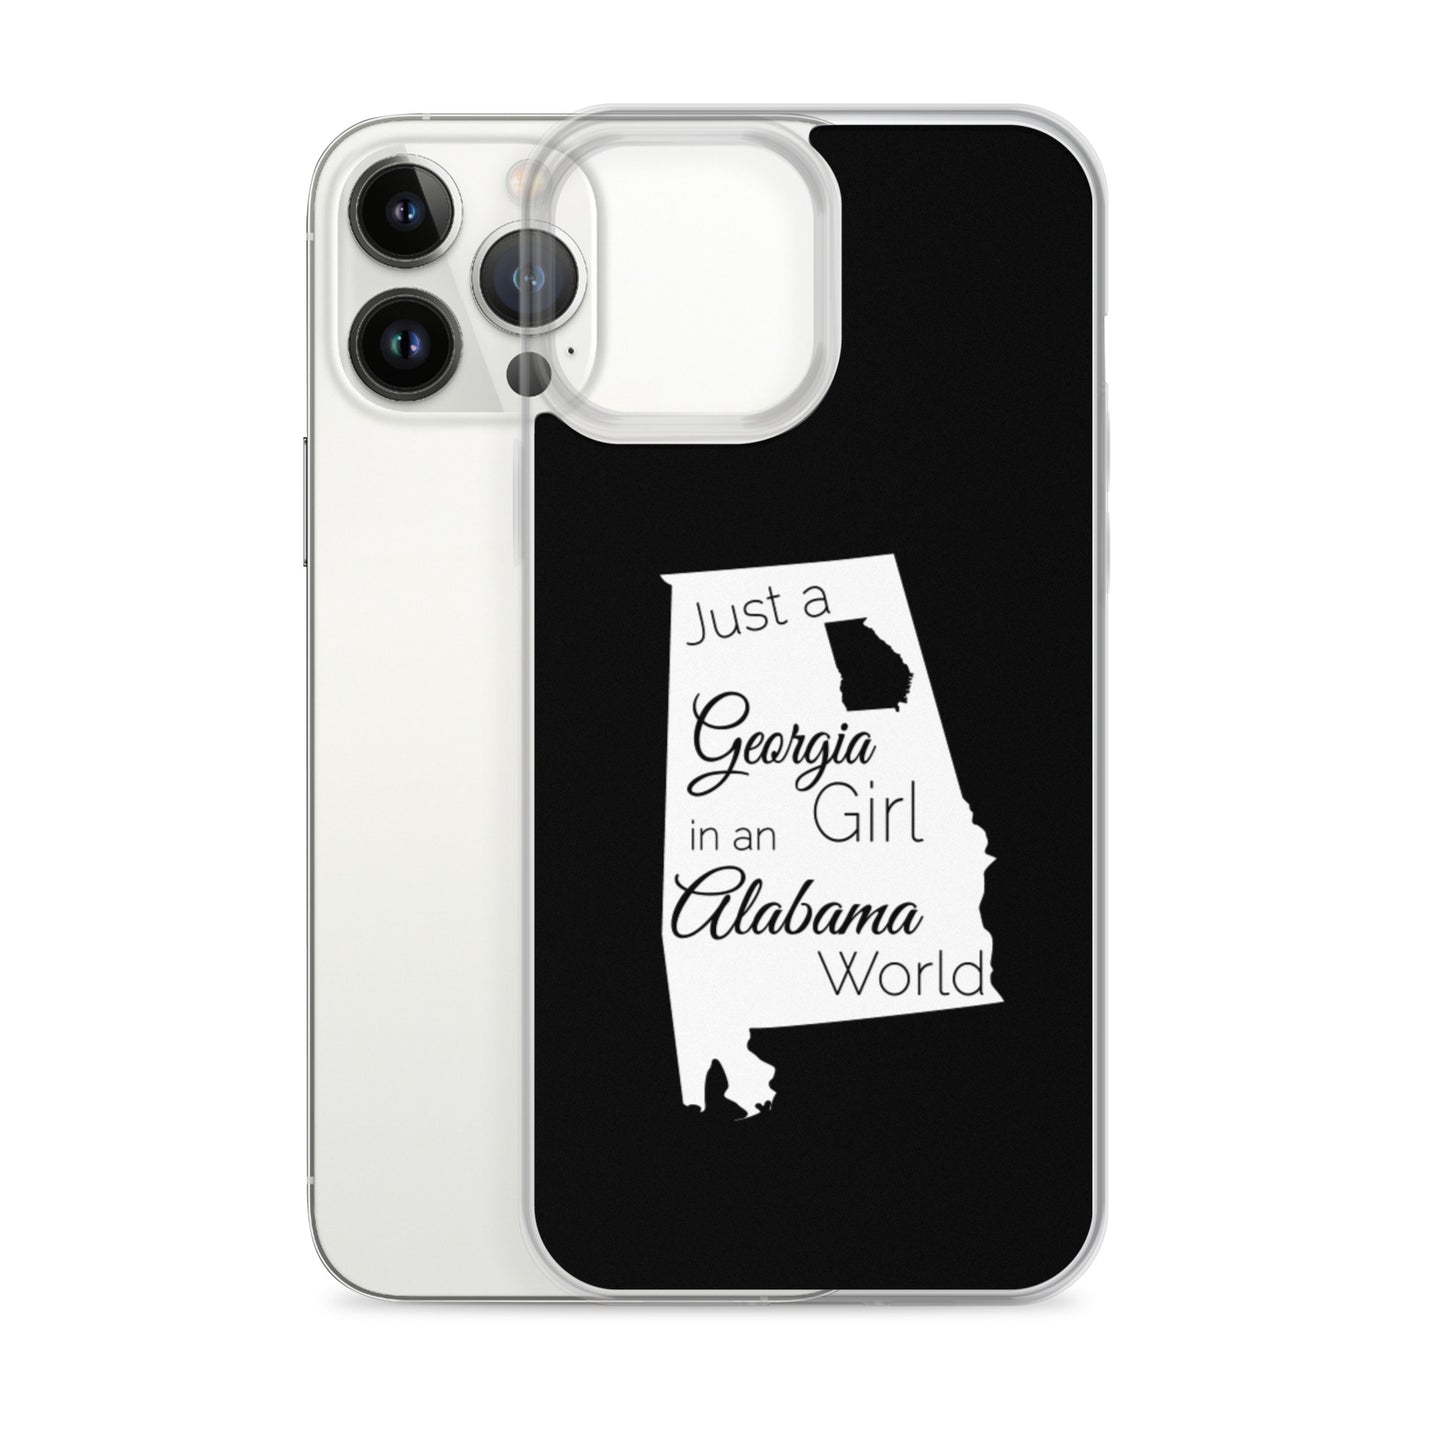 Just a Georgia Girl in an Alabama World iPhone Case